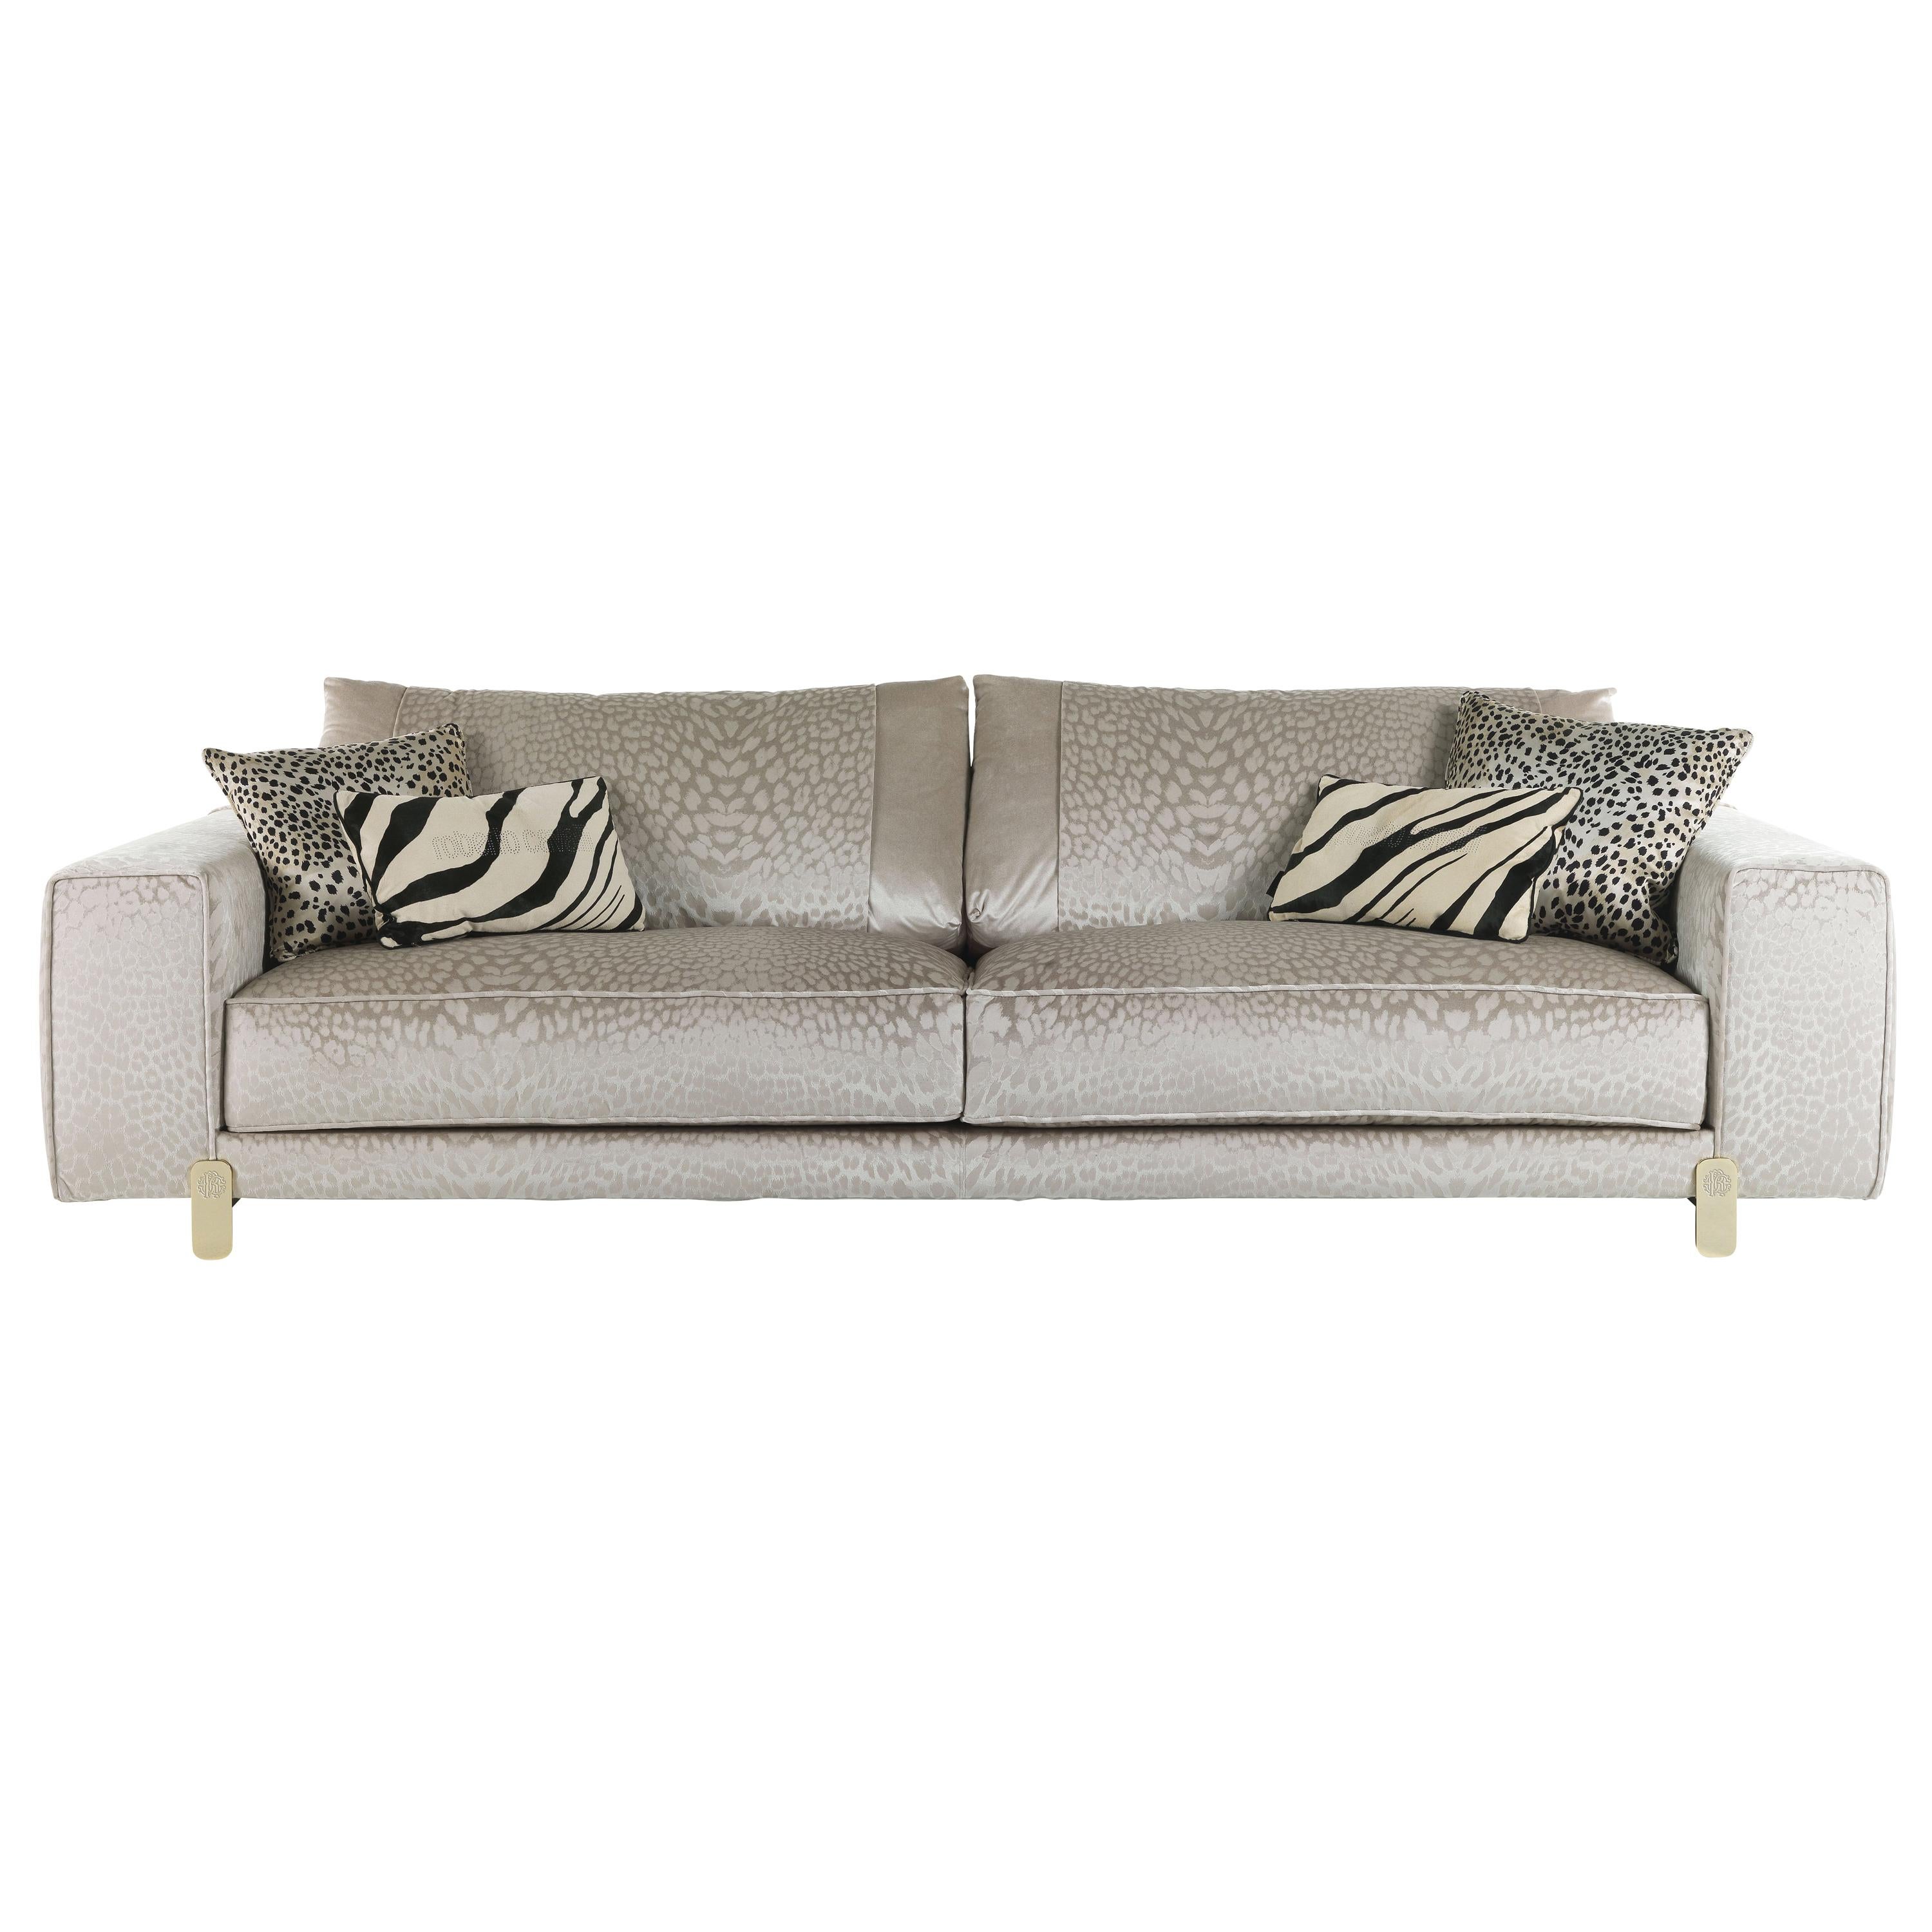 21. Jahrhundert Caicos 3-Sitzer-Sofa aus Stoff von Roberto Cavalli Home Interiors 